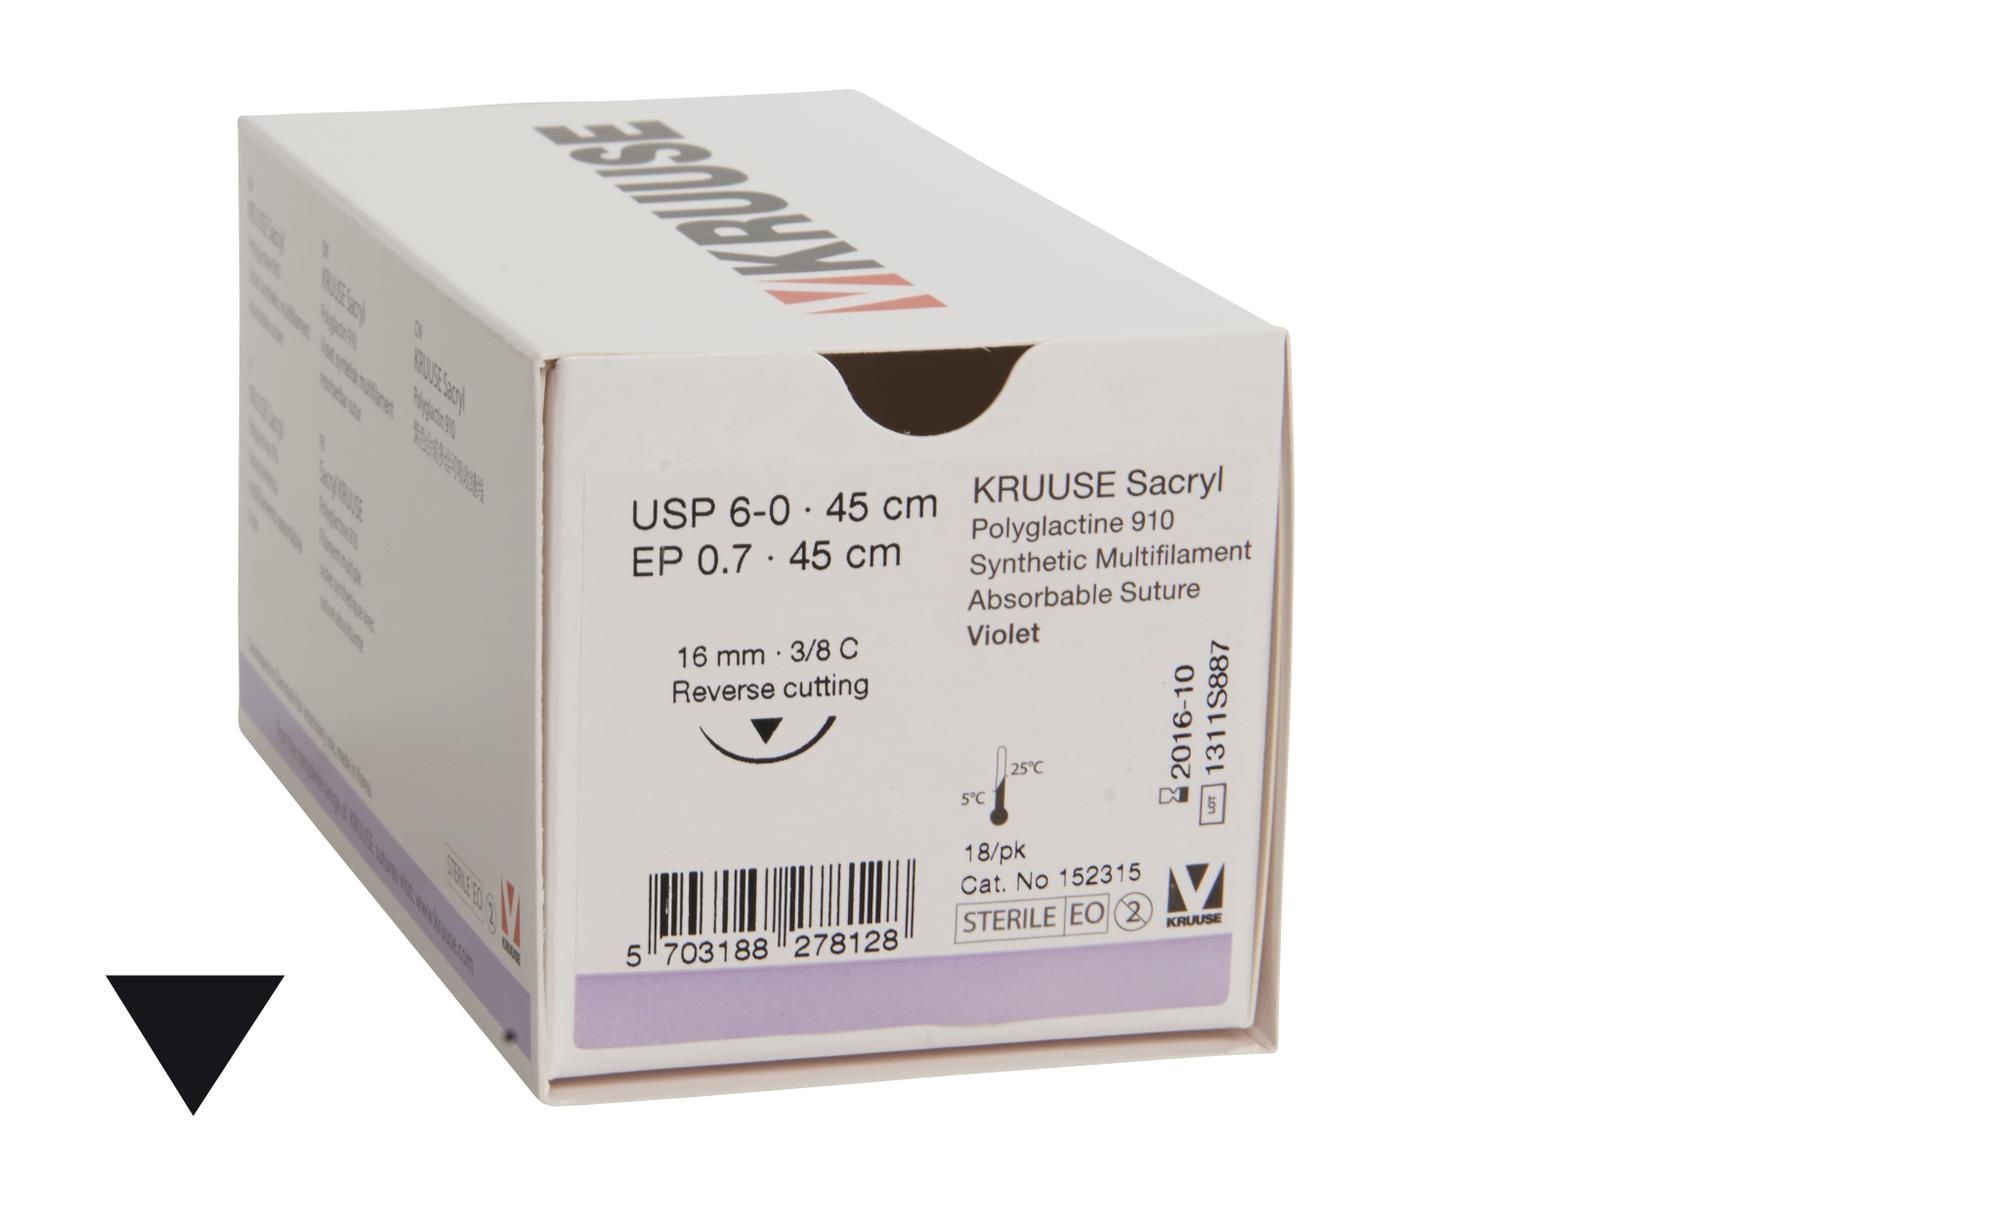 KRUUSE Sacryl Suture, USP 6-0, 45 cm, 16 mm, 3/8C, RC, 18/pk